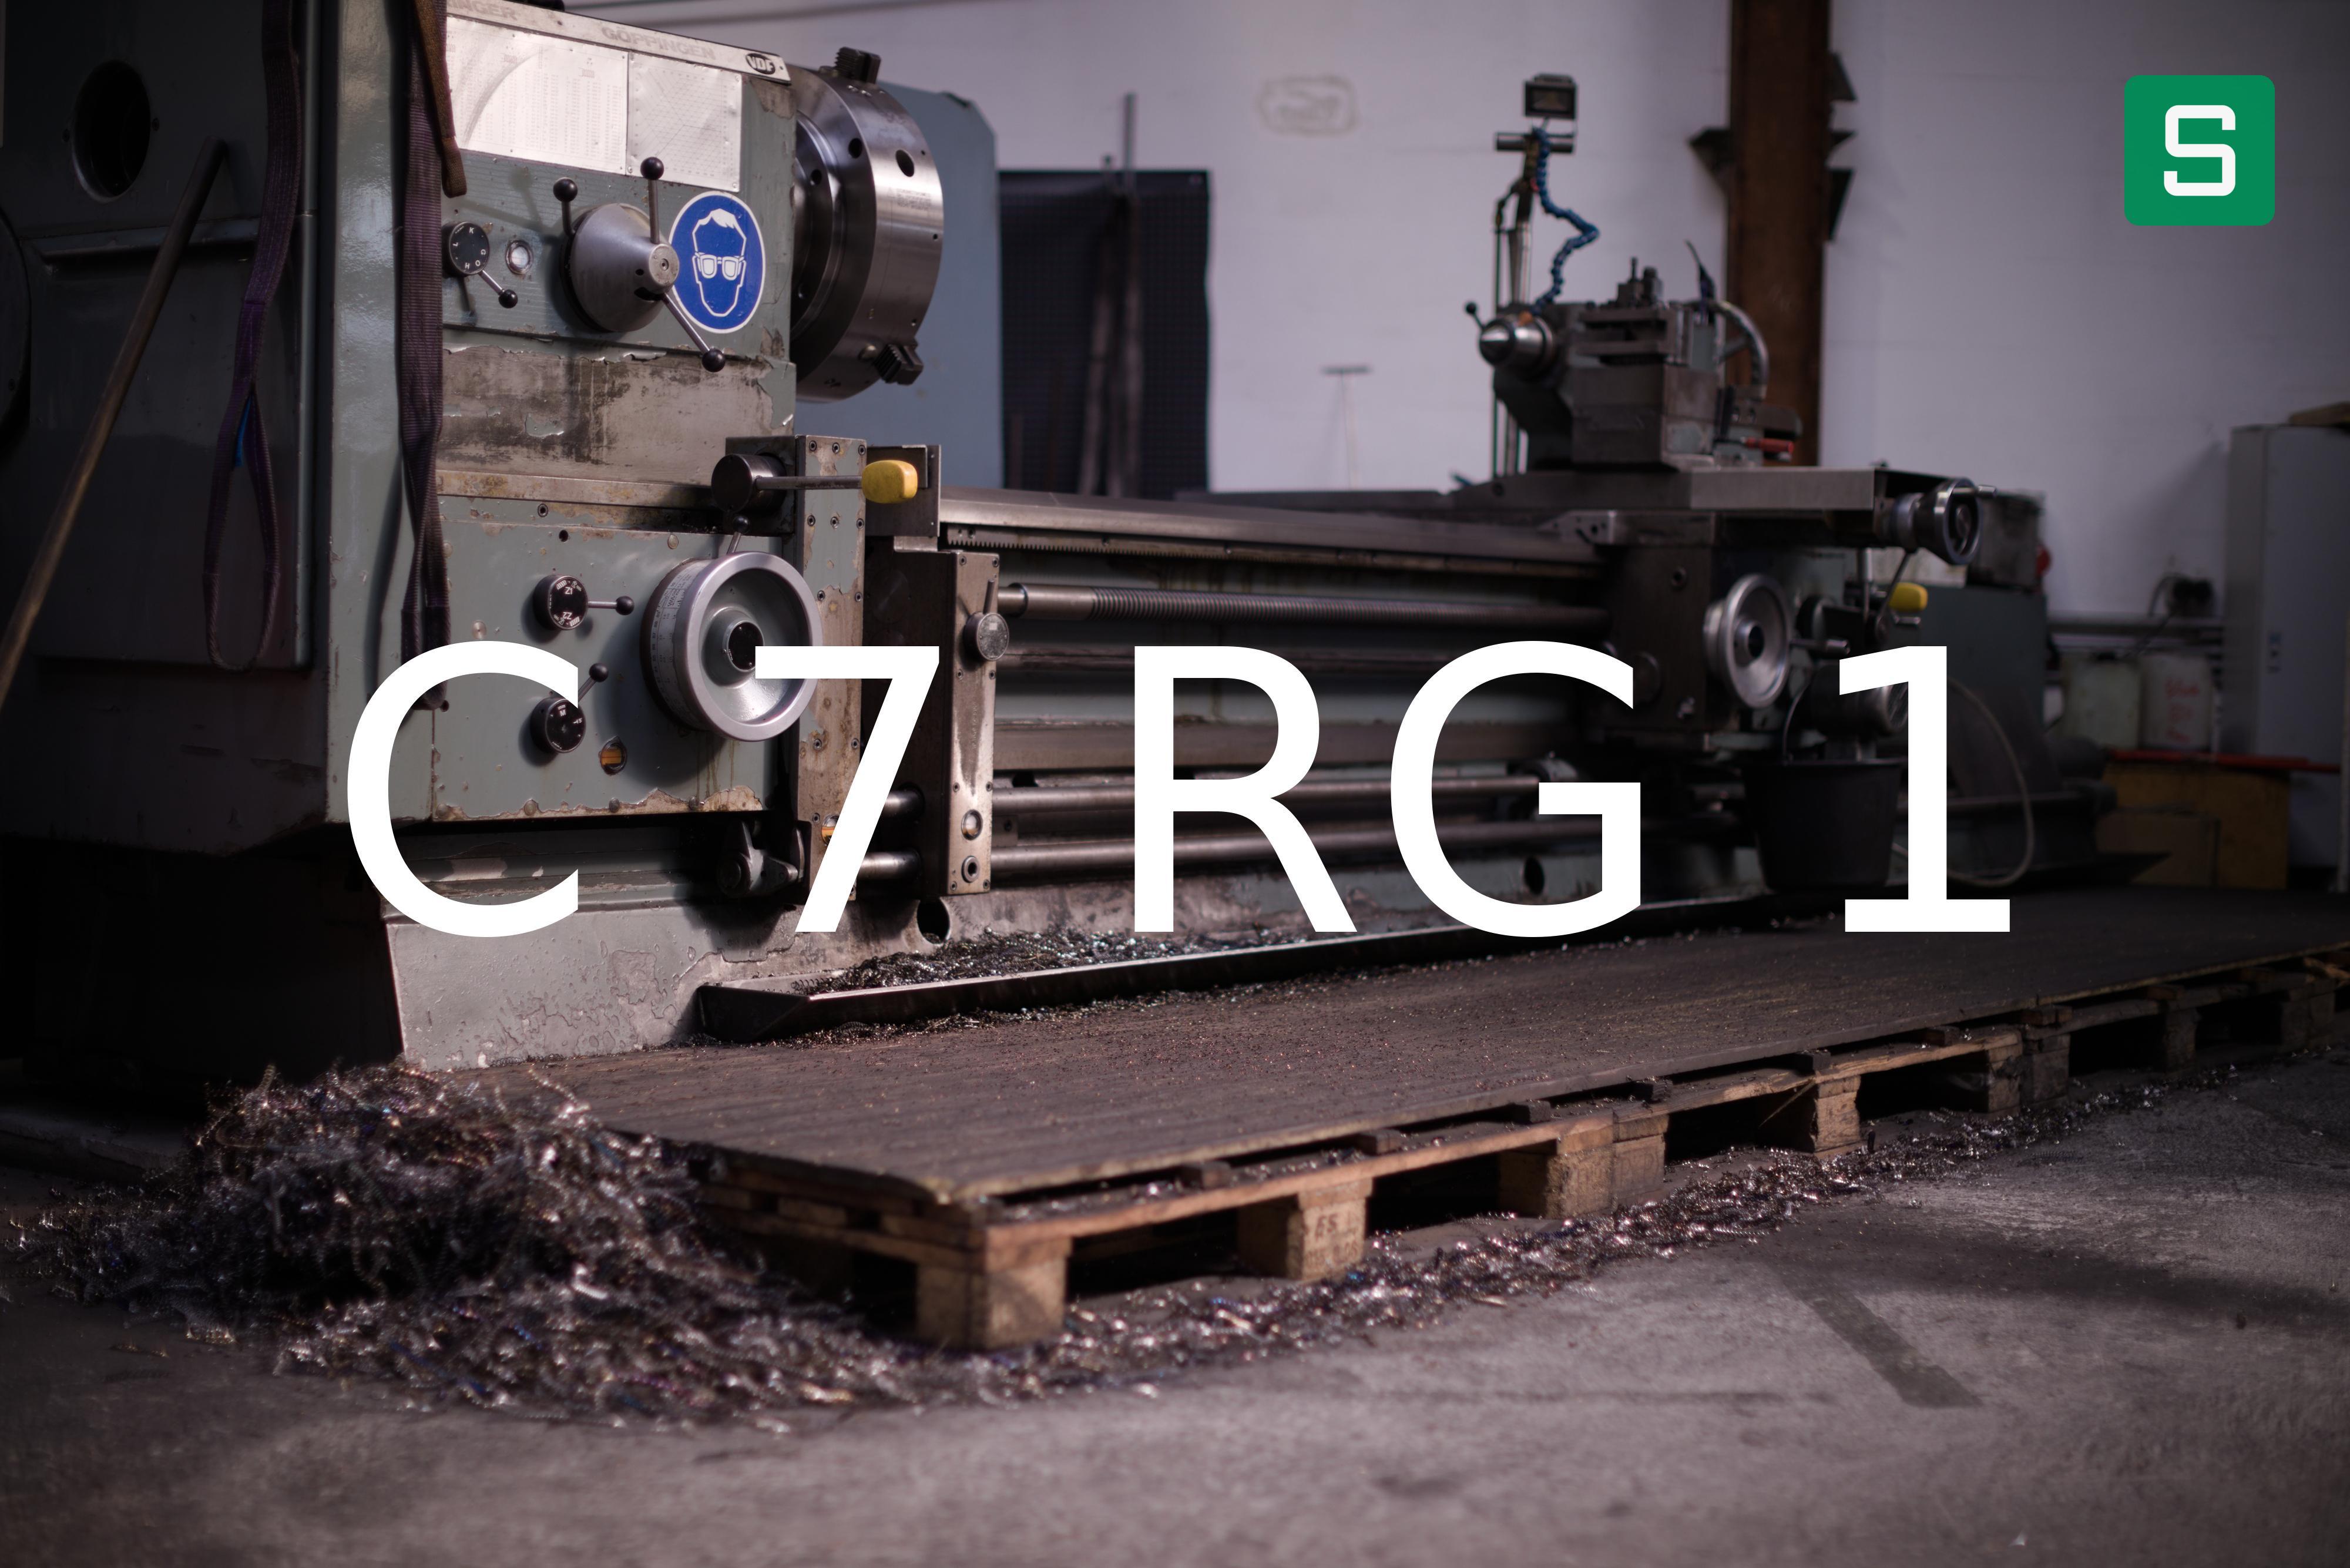 Steel Material: C 7 RG 1